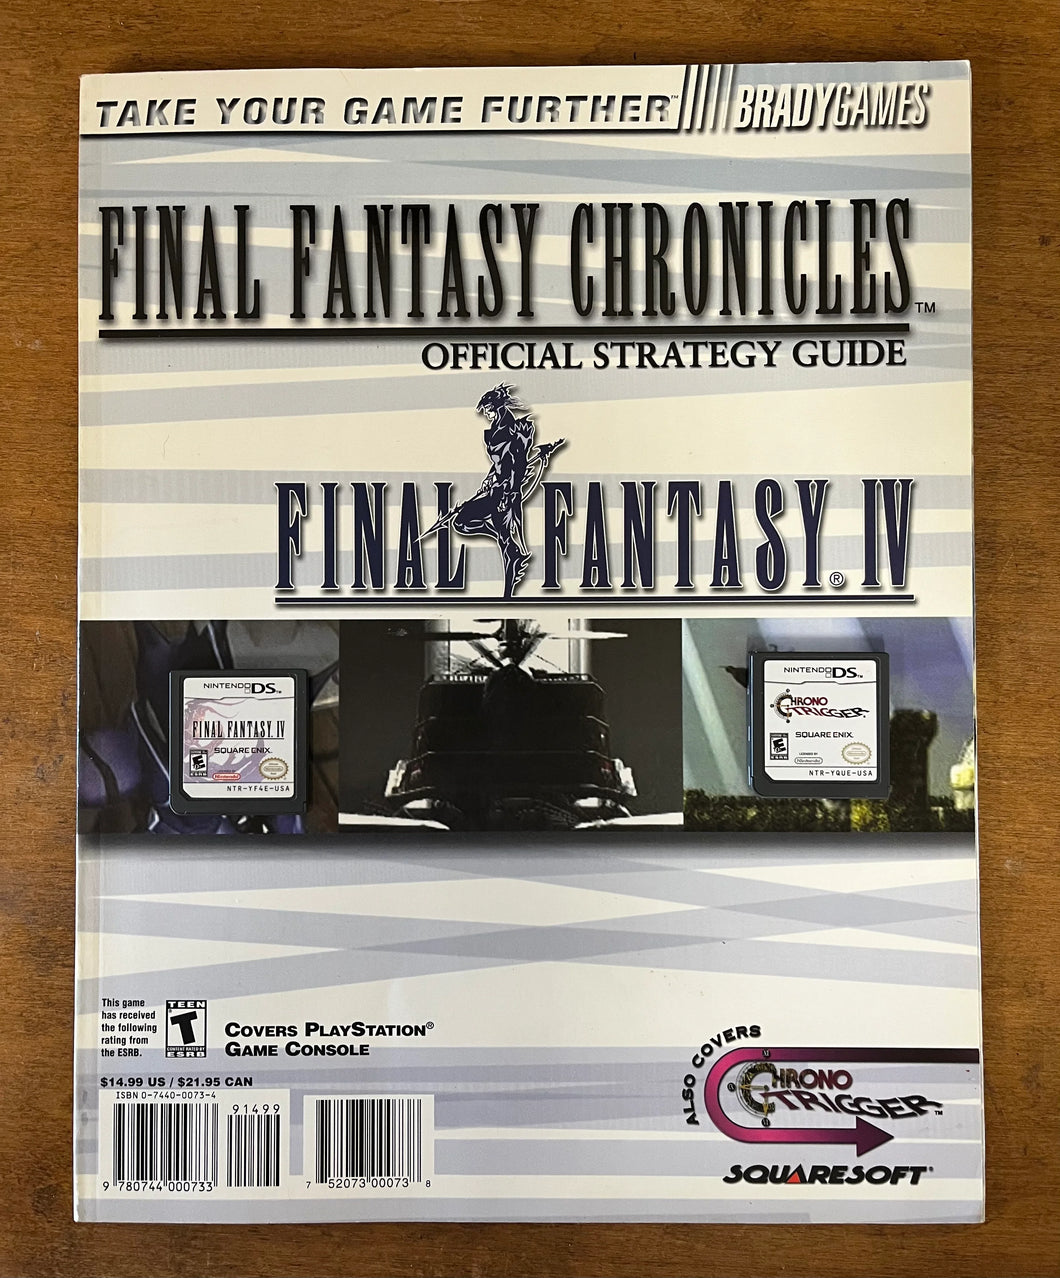 Final Fantasy Chronicles Bundle